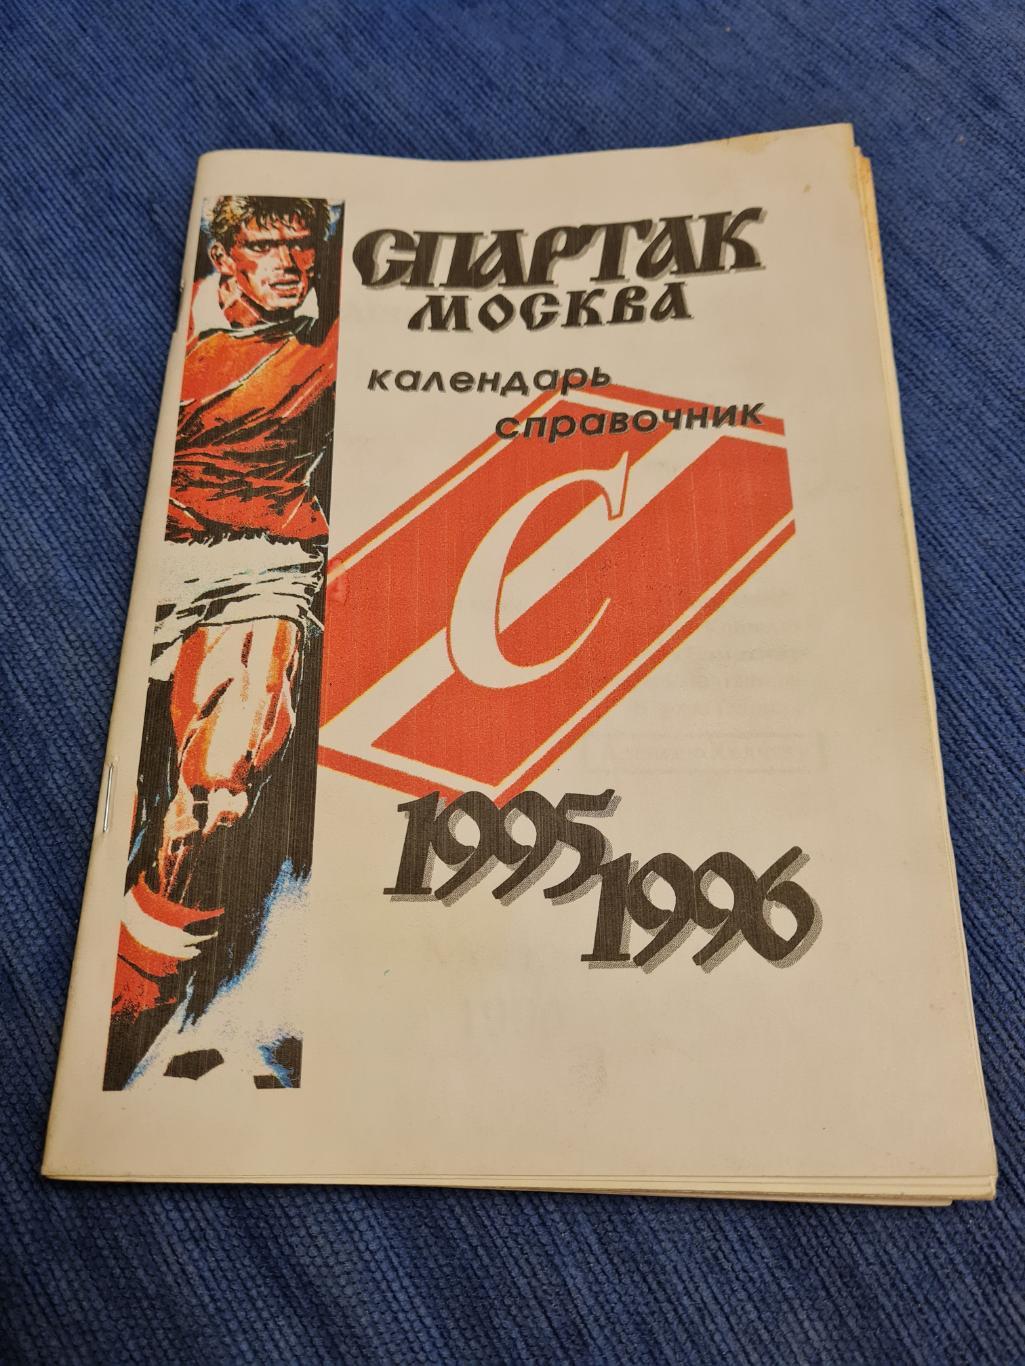 Спартак Москва. Календарь - справочник. 1995 /1996 .